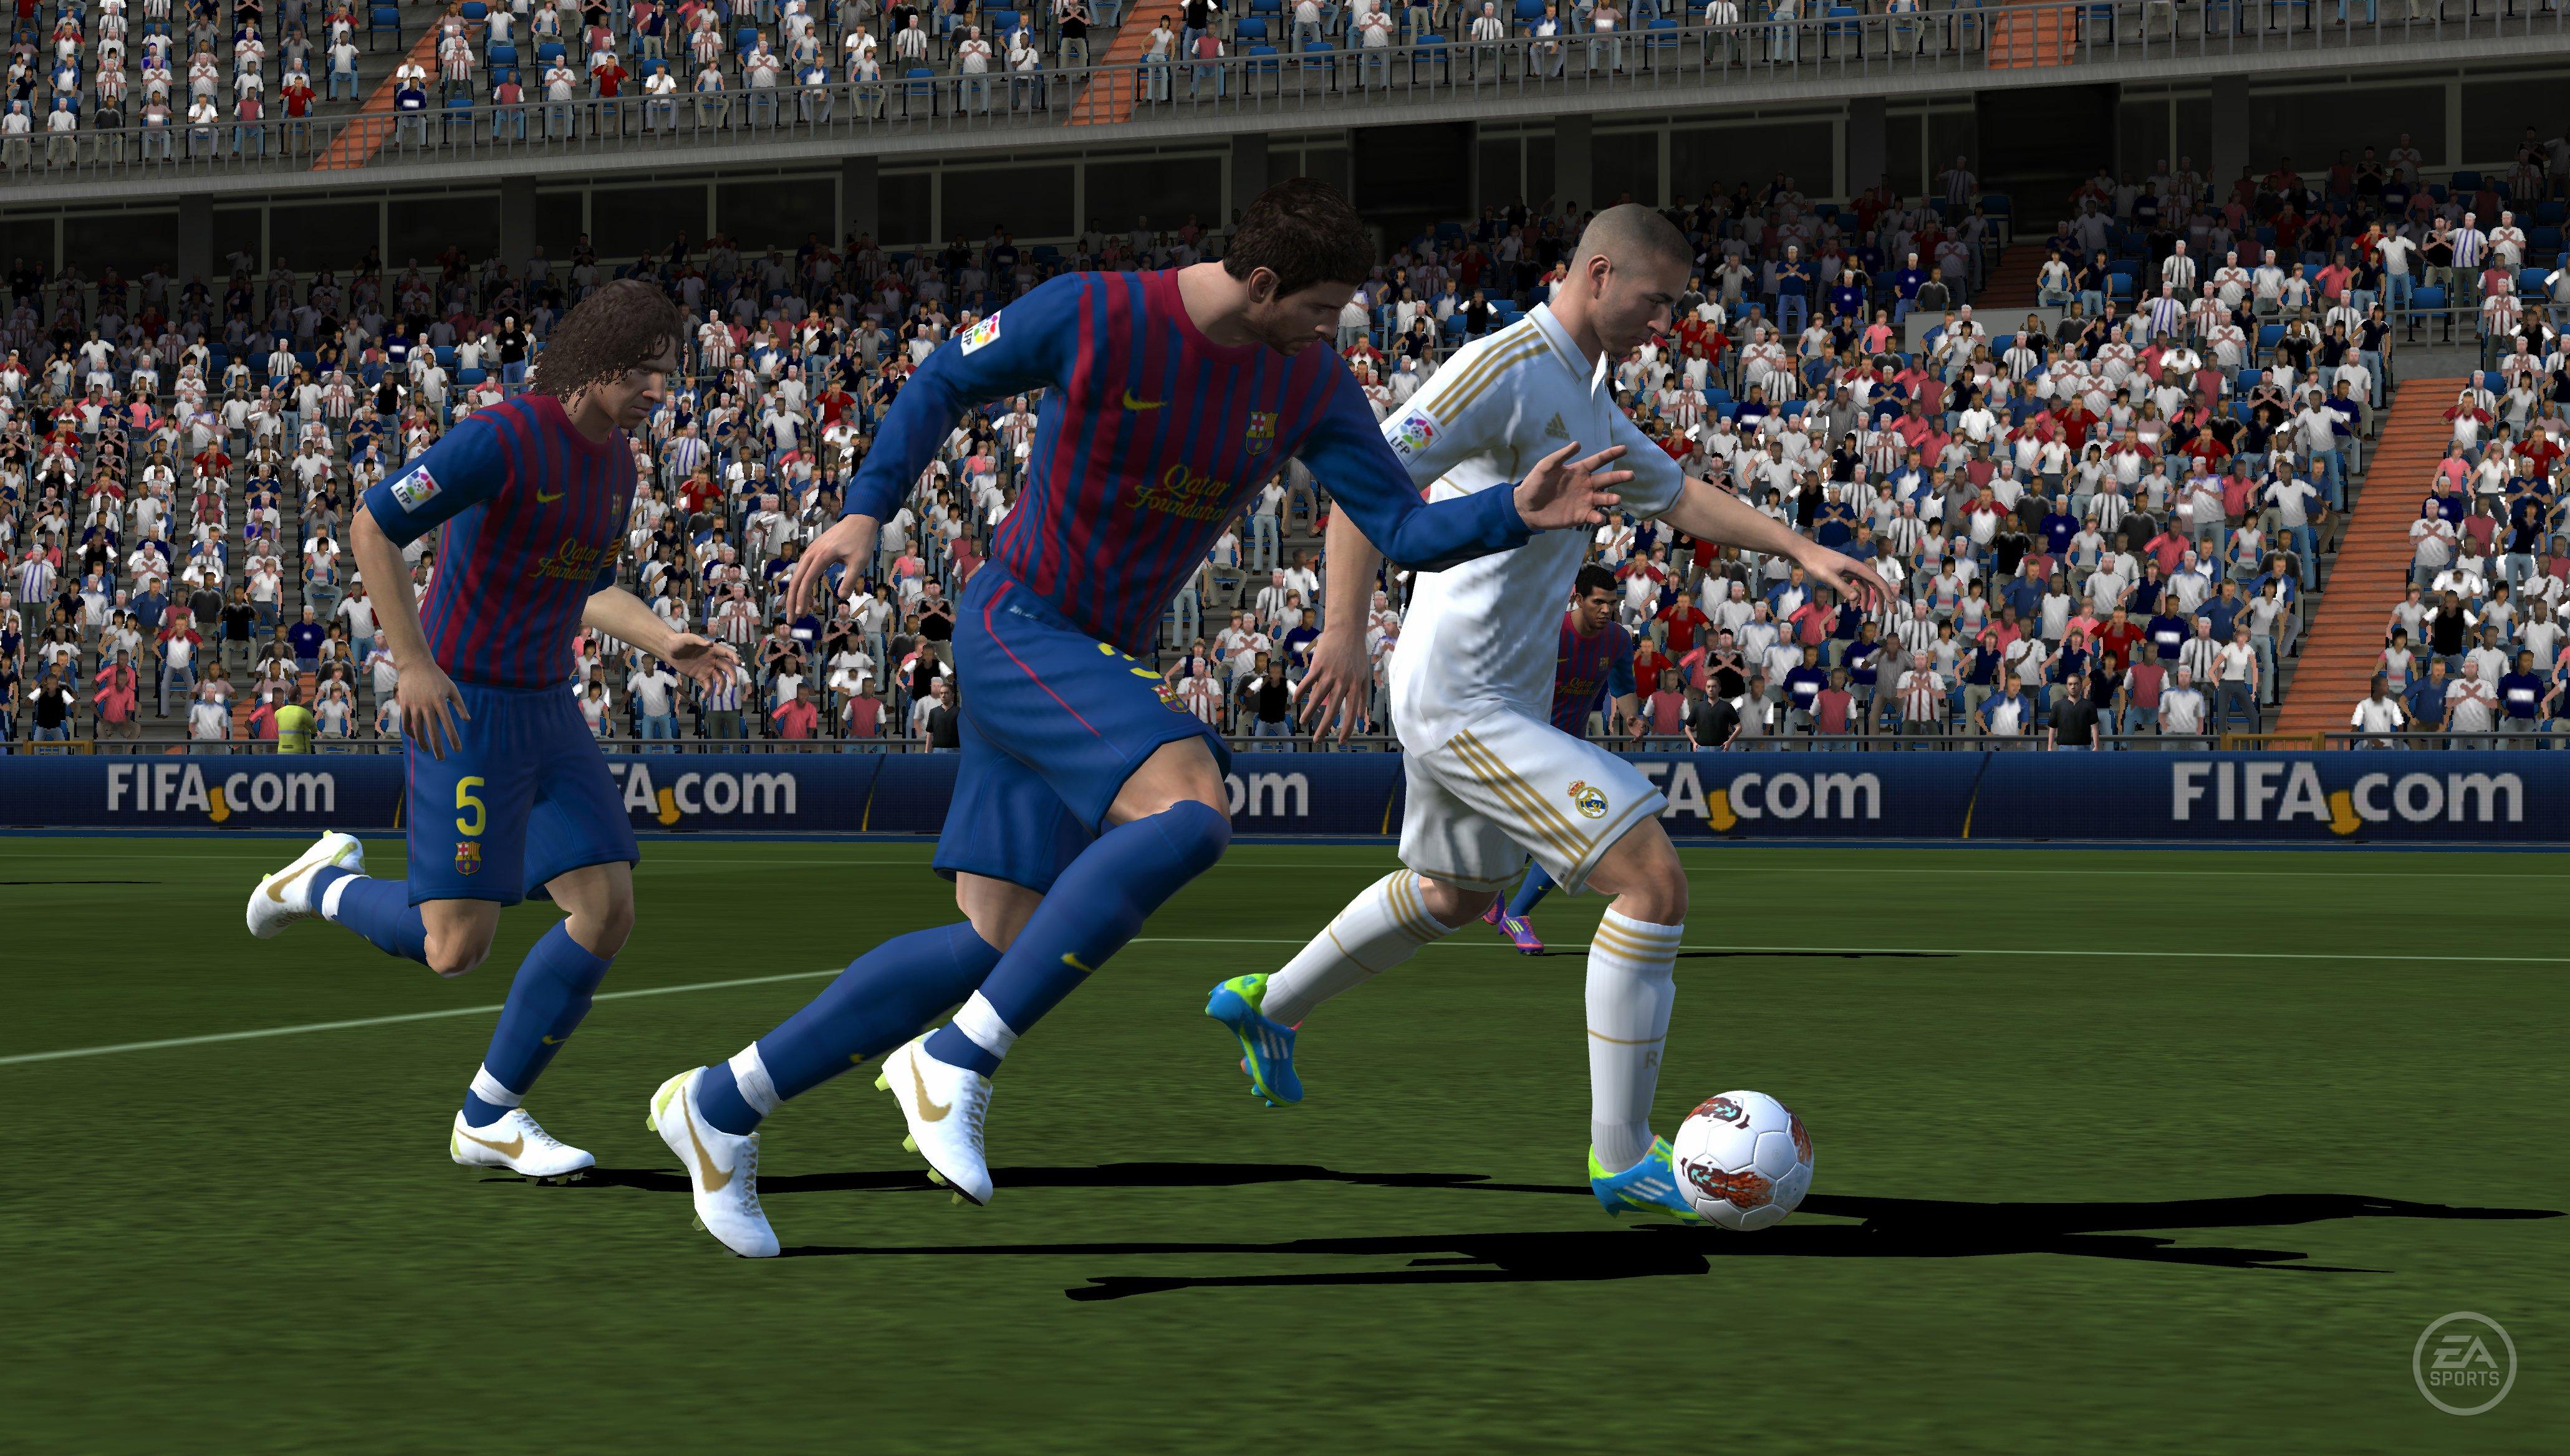 Fifa Soccer Ps Vita Gamestop